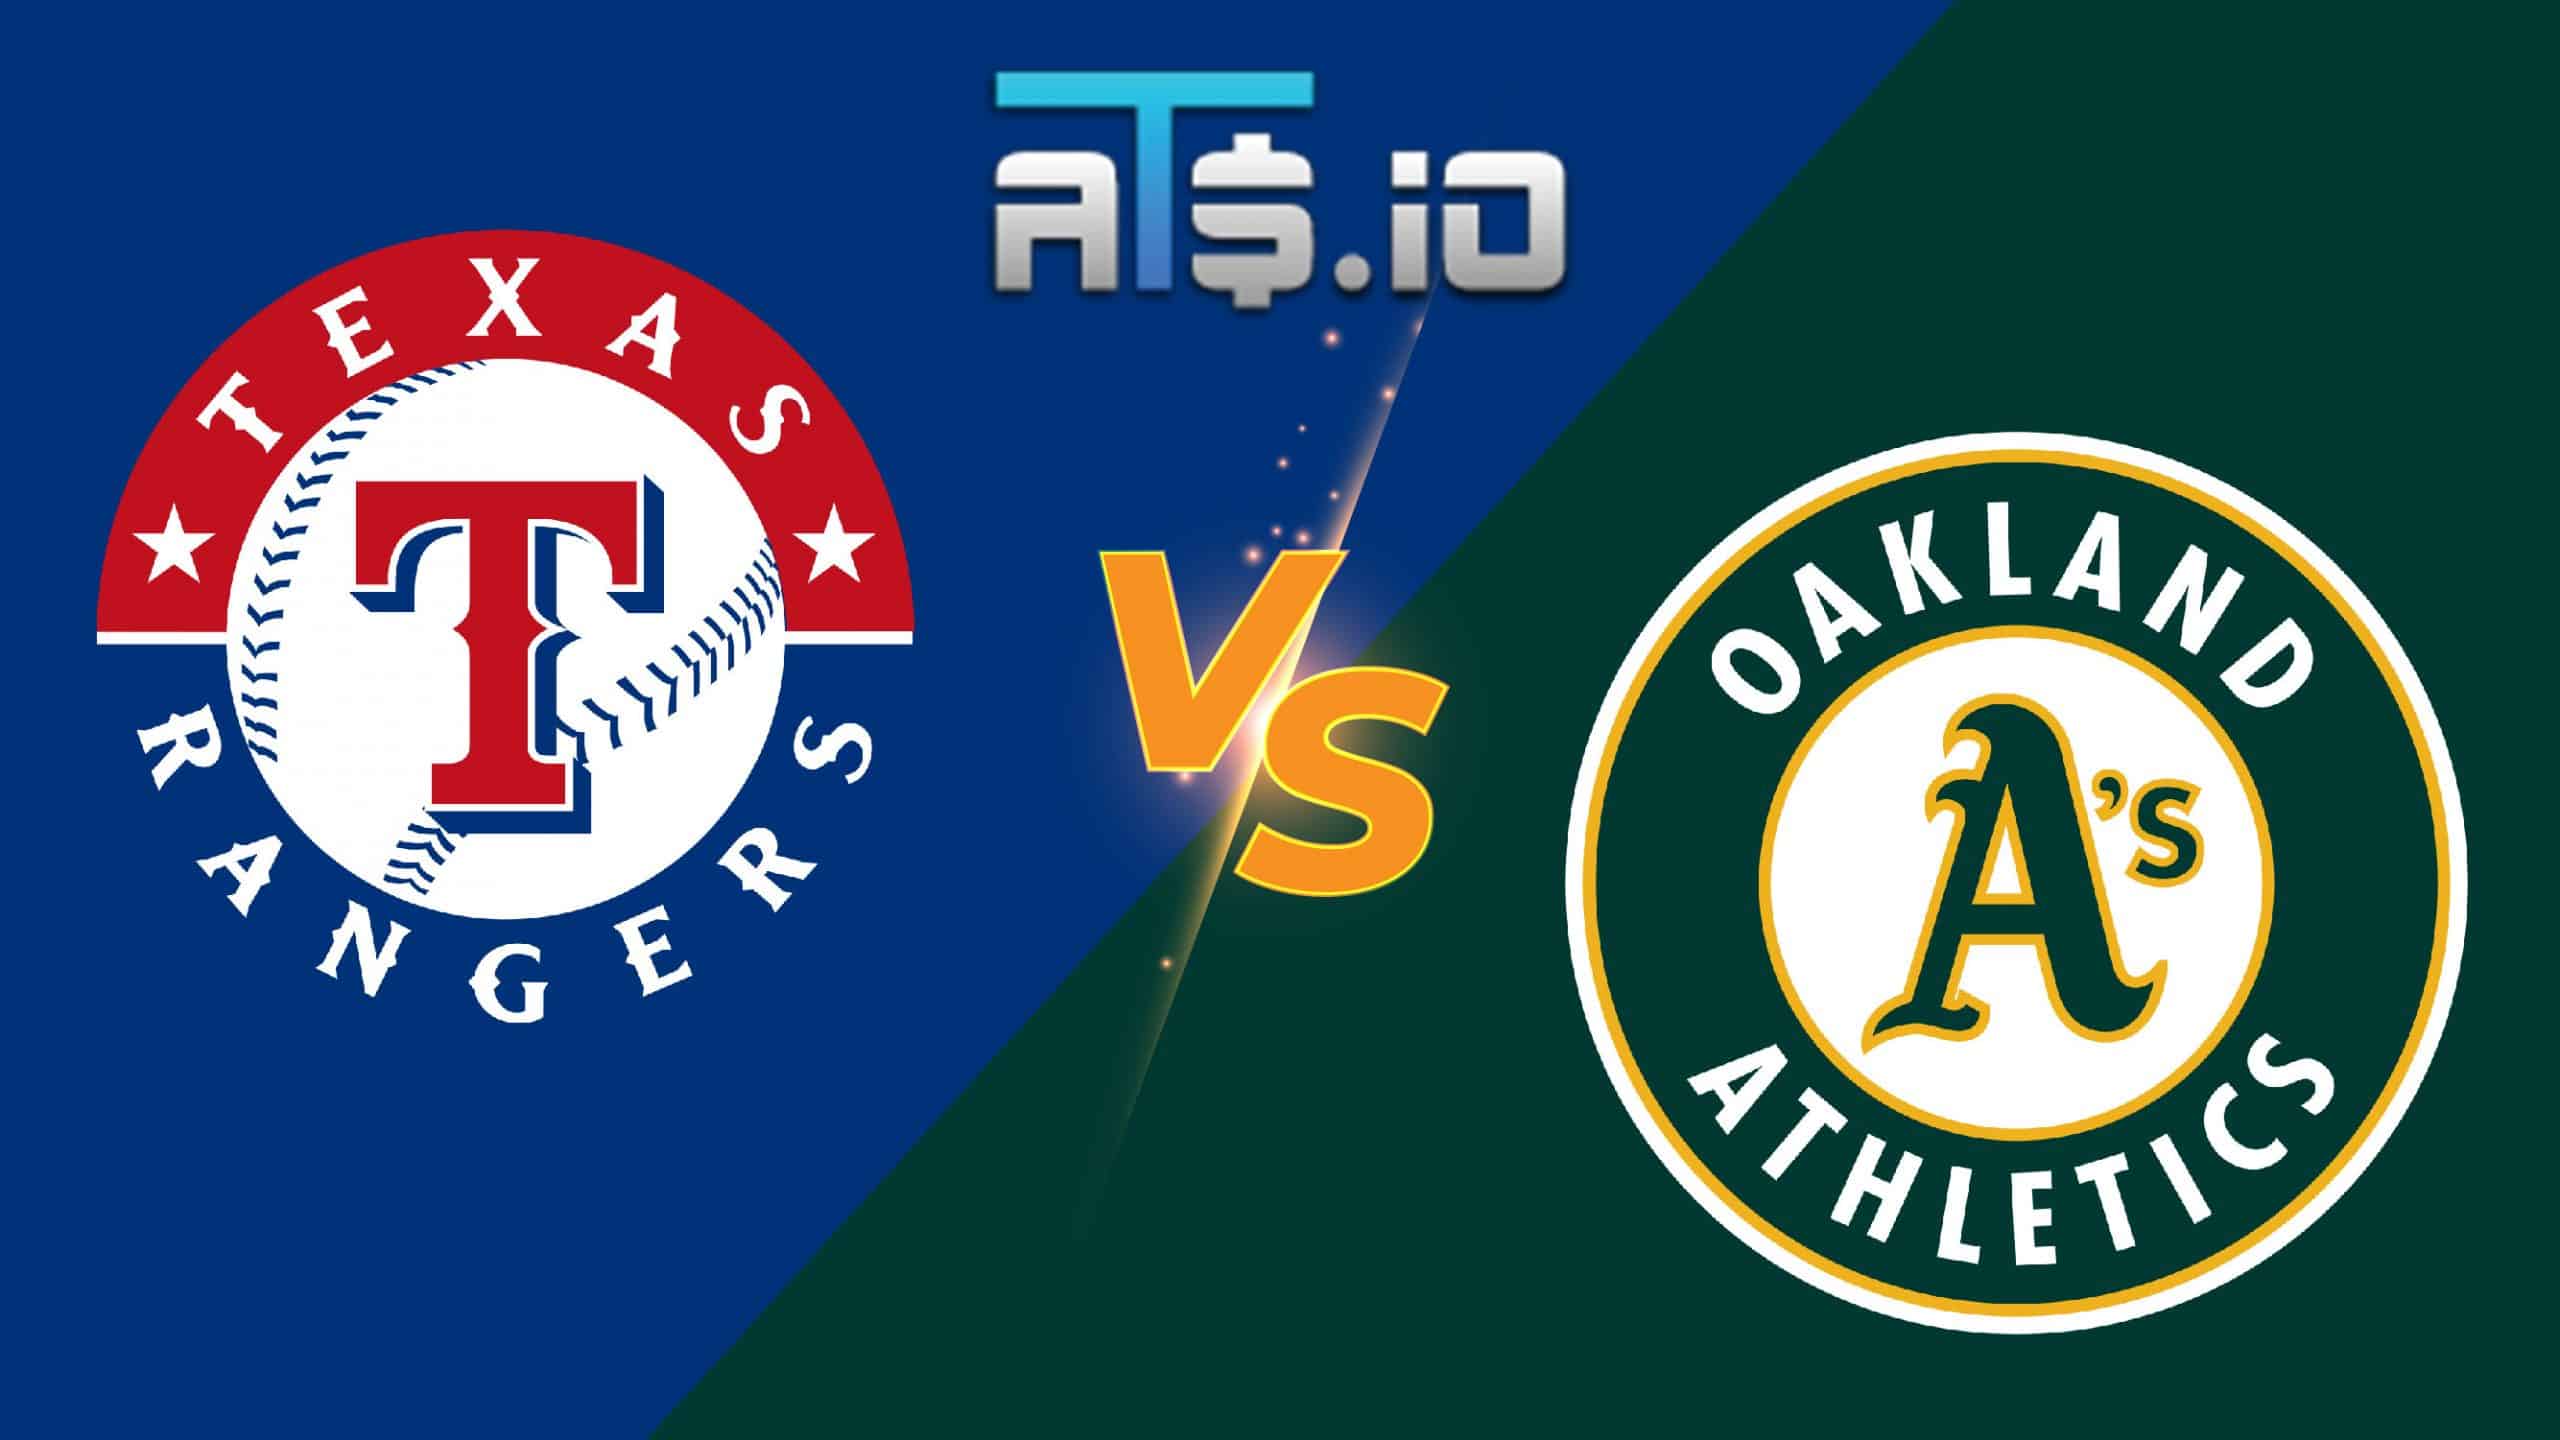 Texas Rangers vs. Oakland Athletics 7/23/22 MLB Picks, Predictions, Odds